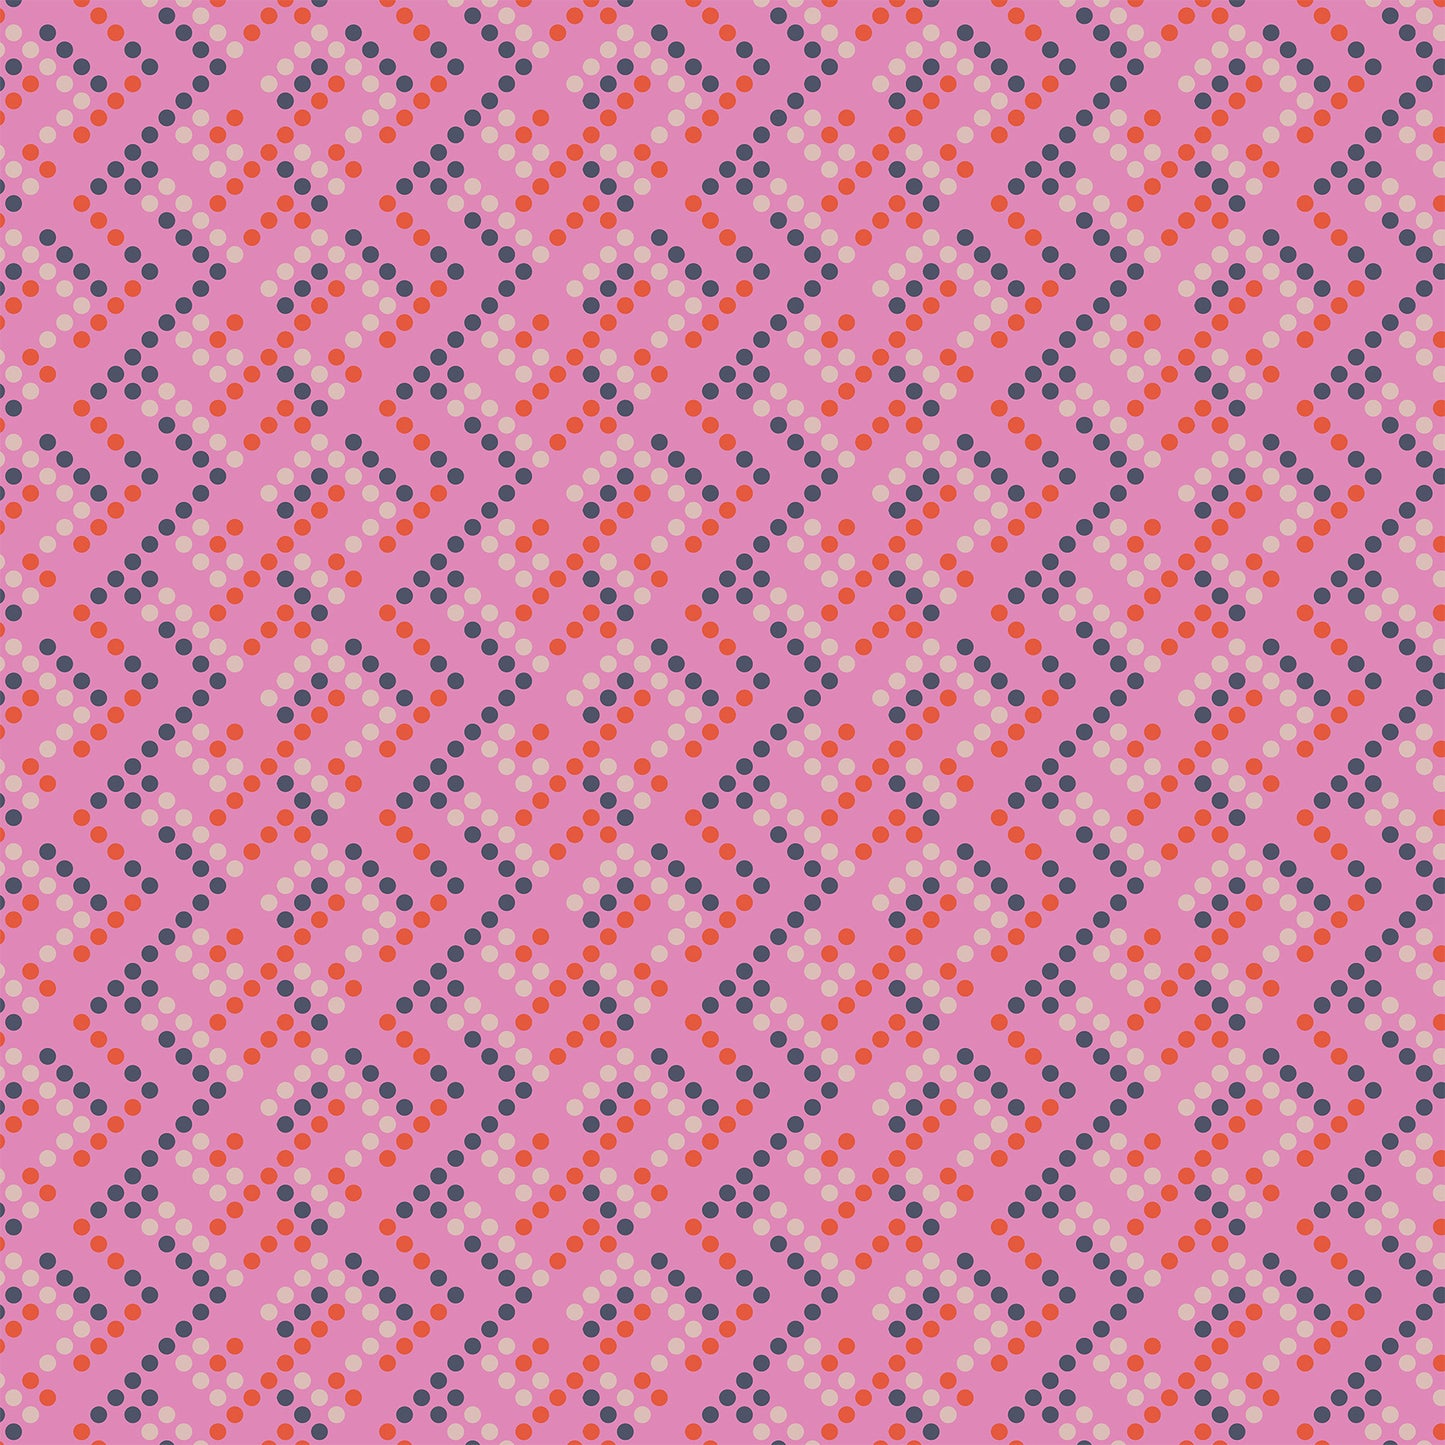 Manufacturer: Figo Fabrics Designer: Dana Willard Collection: Ghosttown Print Name: Dots in Pink Material: 100% Cotton Weight: Quilting  SKU: 90520-21 Width: 44 inches